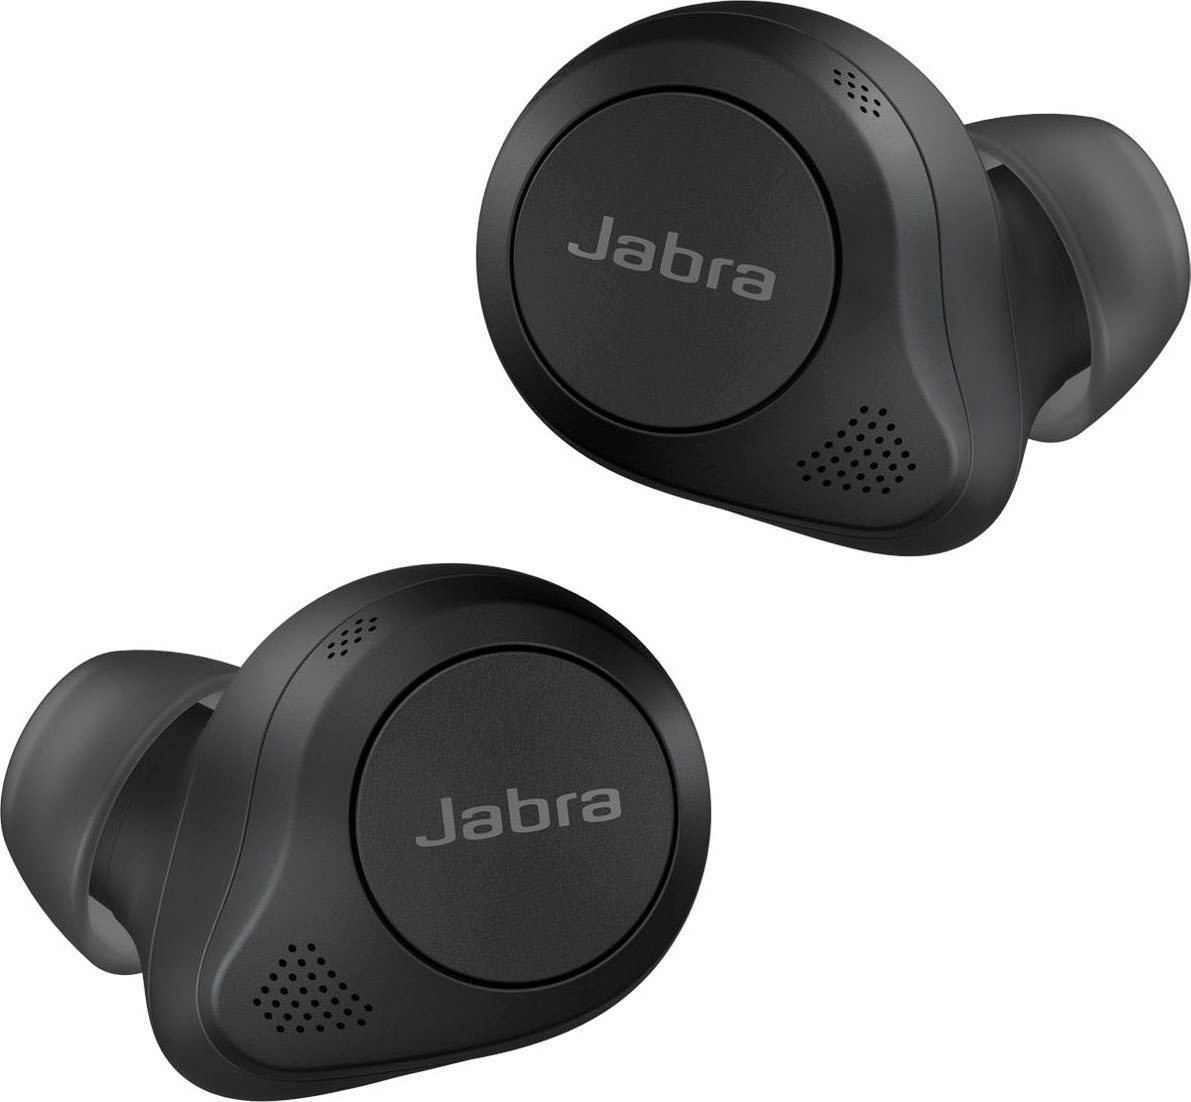 Jabra Bluetooth-Kopfhörer & kabellose Kopfhörer kaufen | OTTO